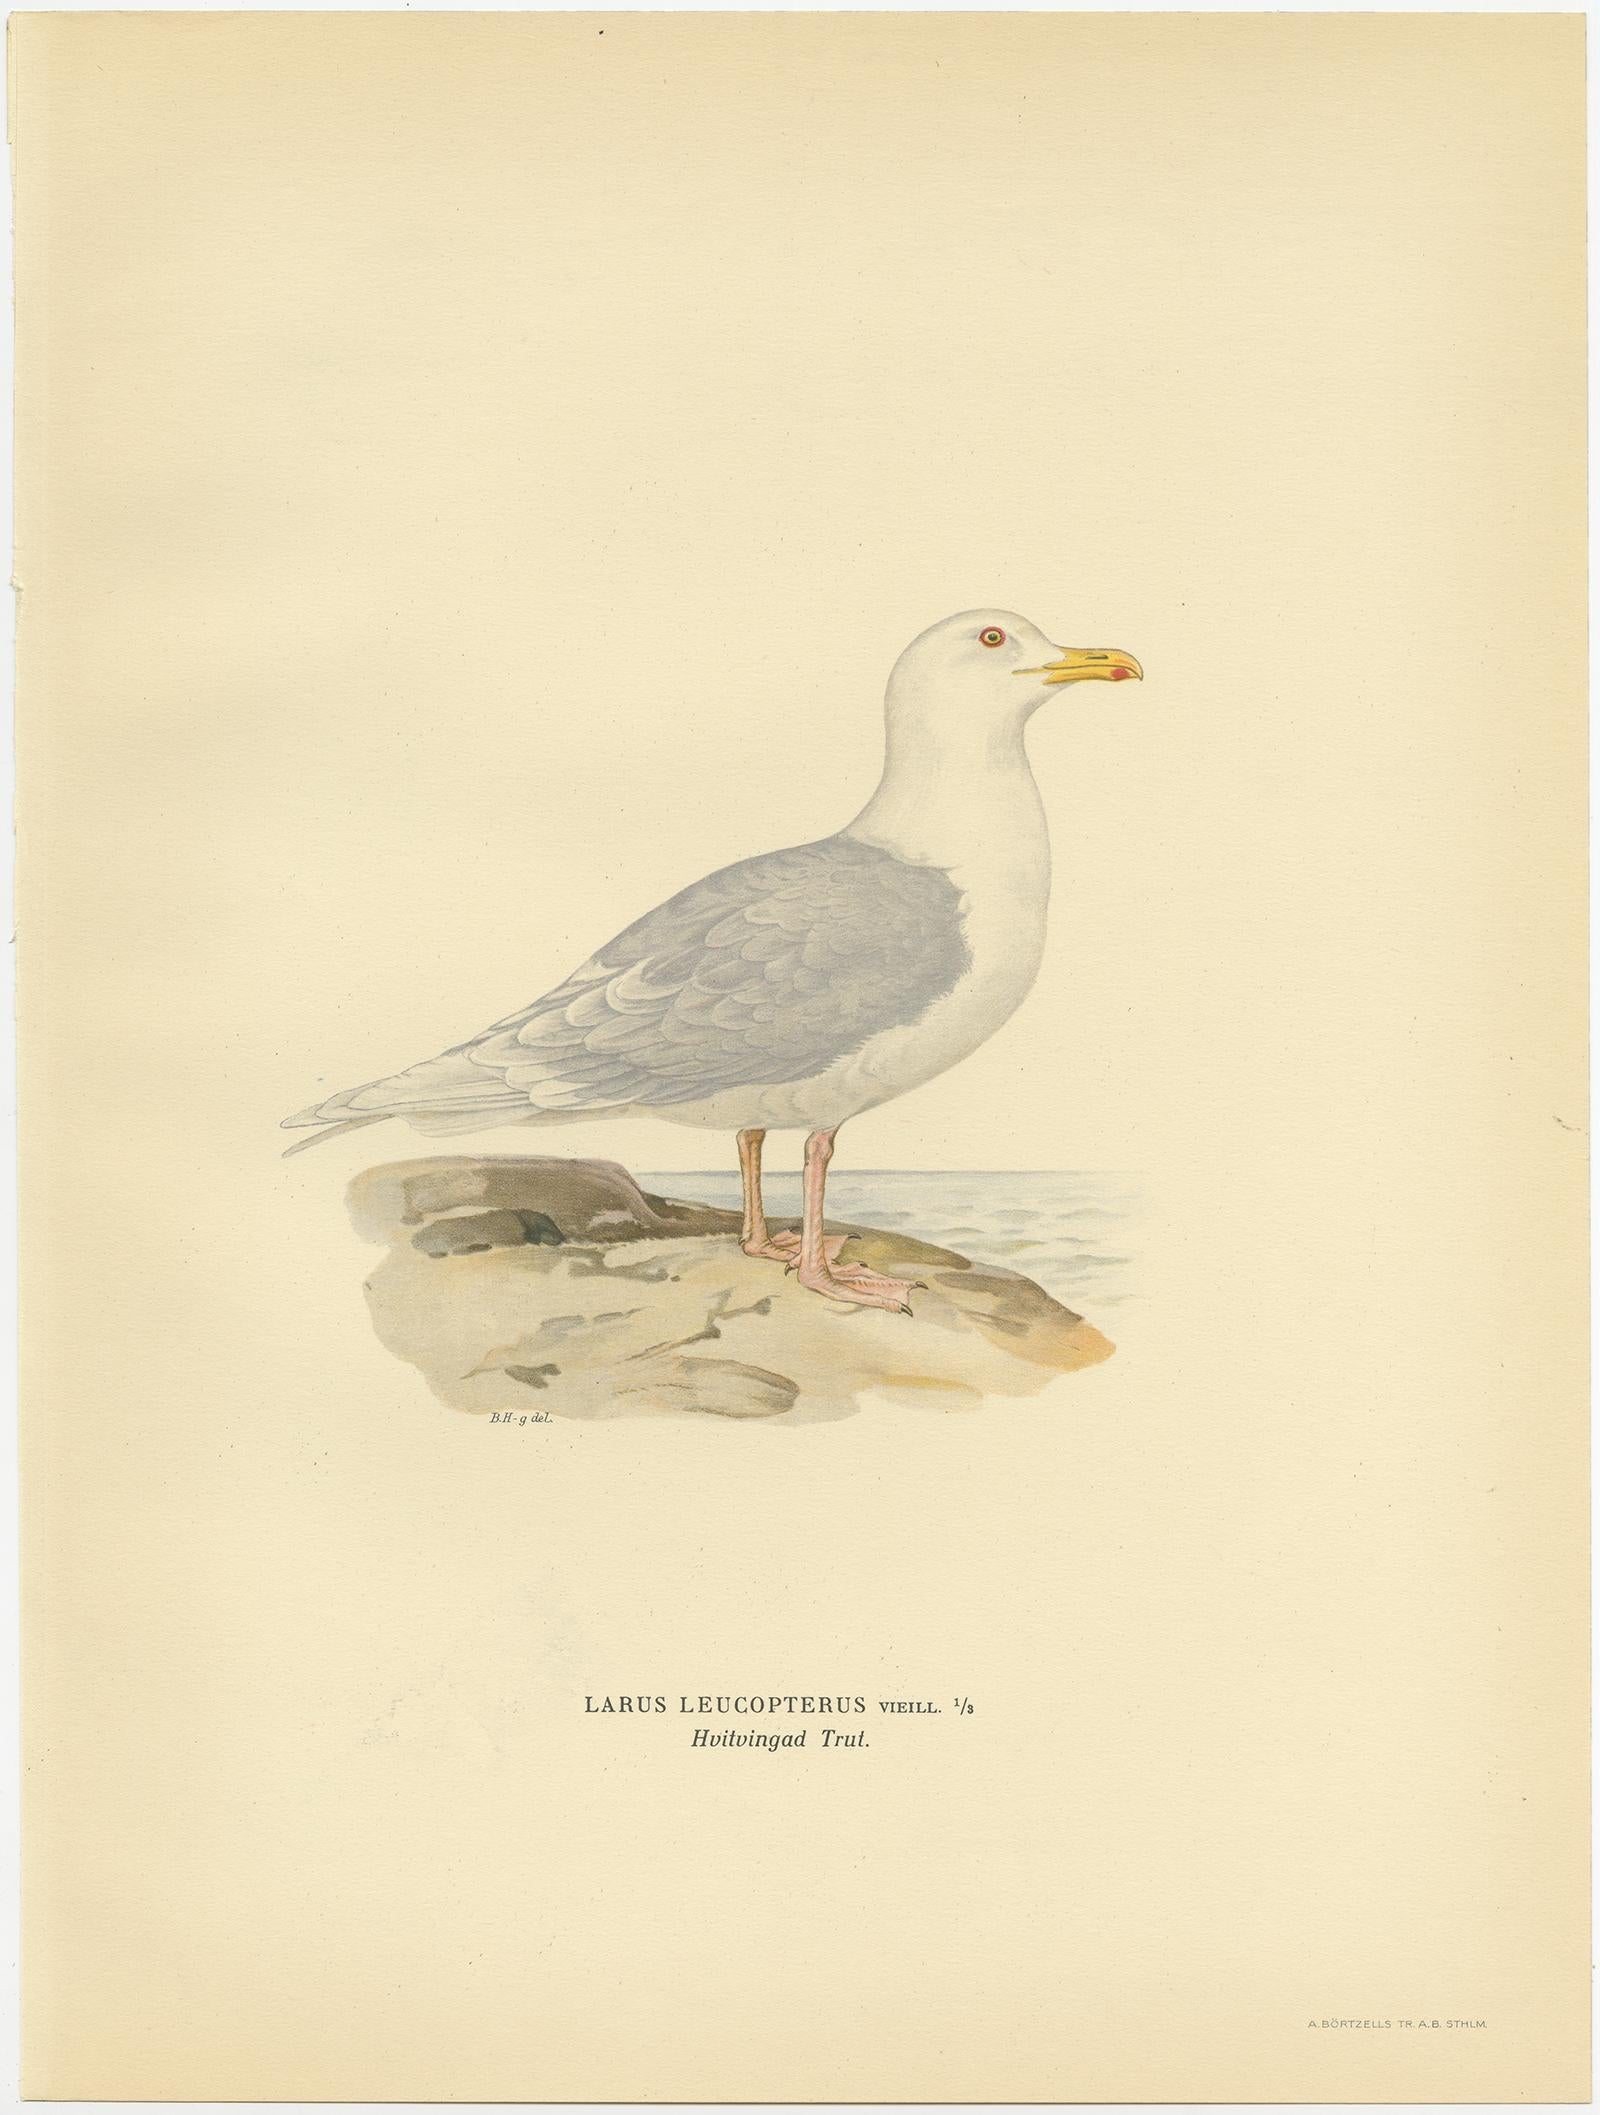 Antique bird print titled 'Larus Leucopterus'. Old bird print depicting the White-Winged Tern. This print originates from 'Svenska Foglar Efter Naturen Och Pa Stenritade' by Magnus von Wright.